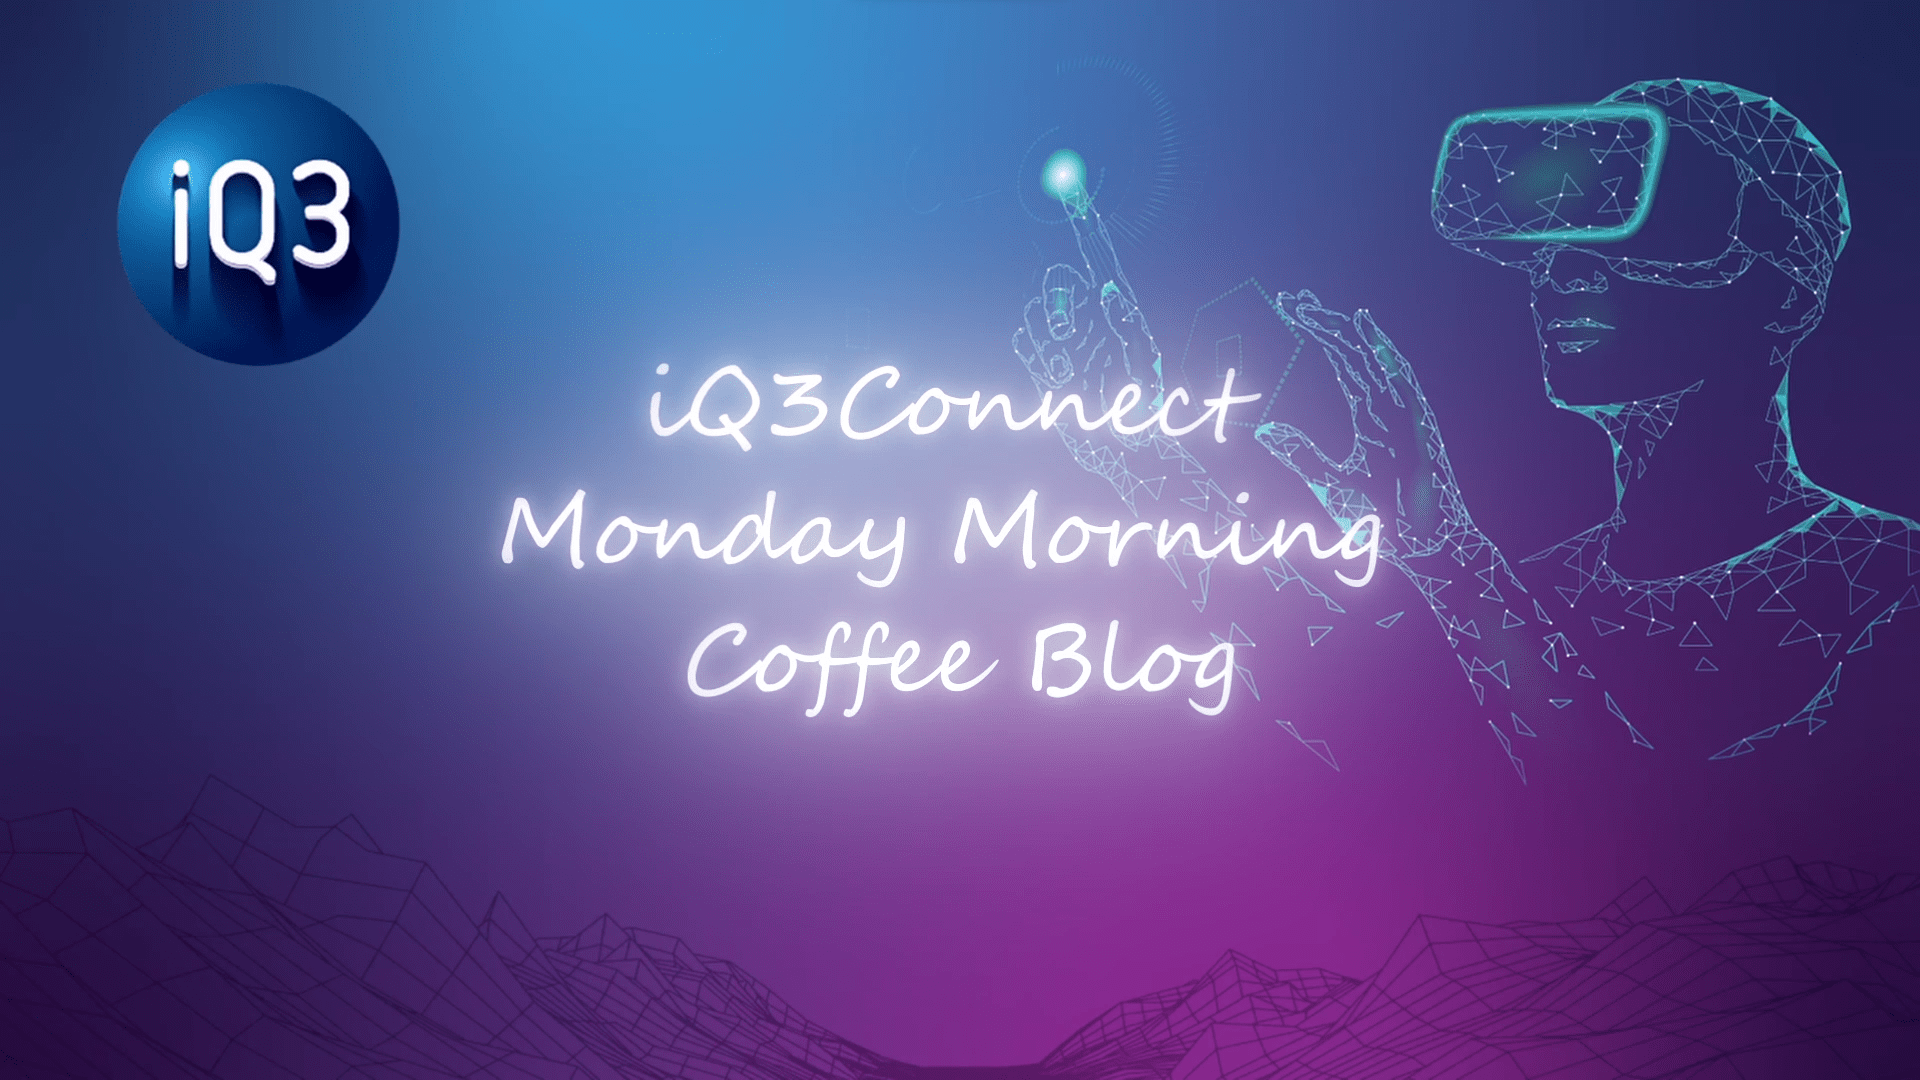 Monday Morning Coffee Blog - XR News